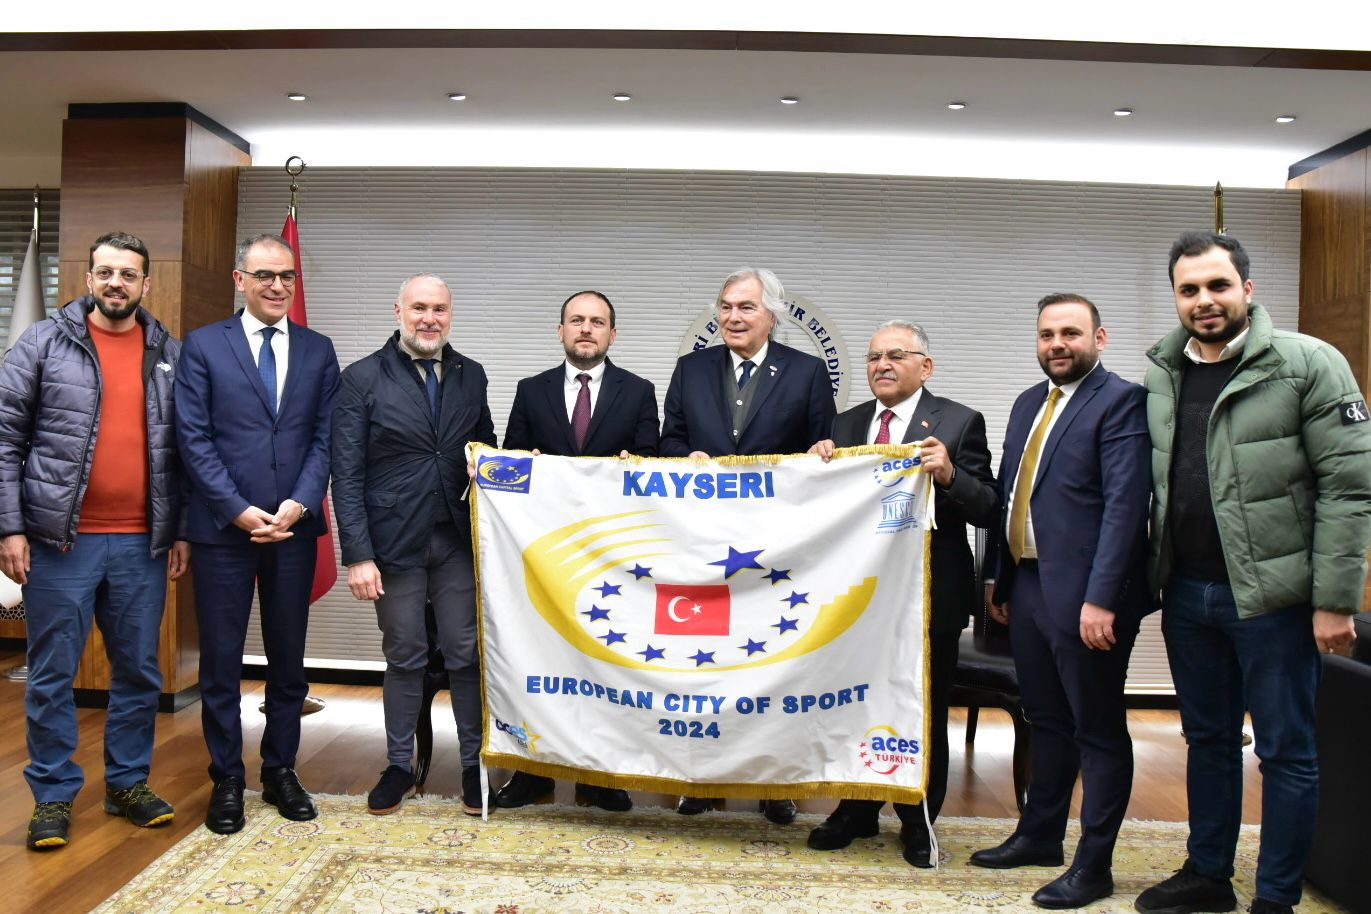 Aces Europe Komitesinden Spor Şehri Kayseri’ye Tam Not